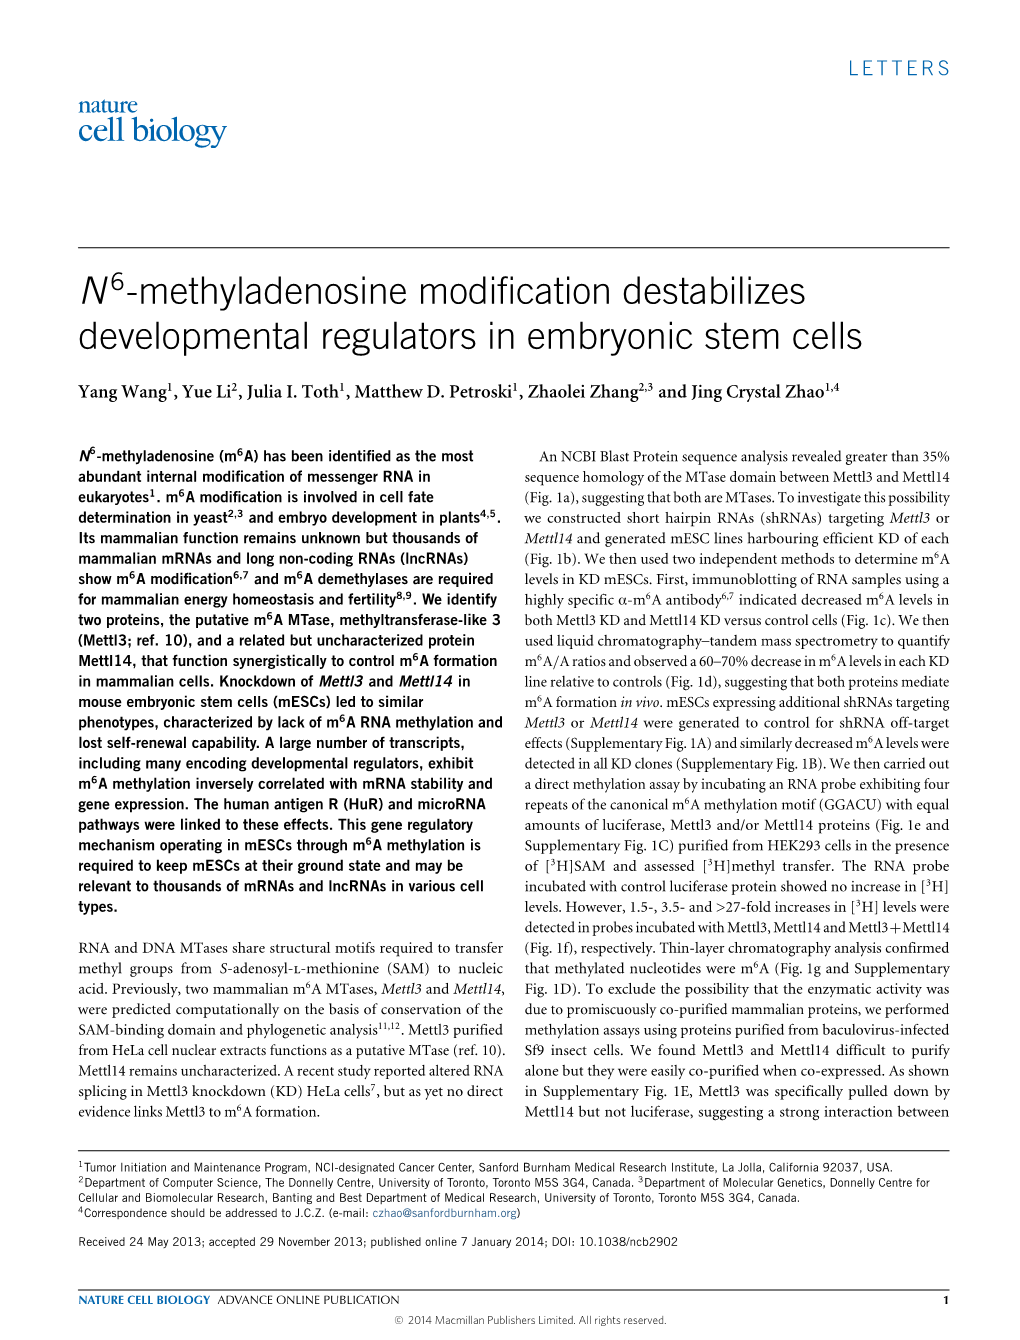 N6-Methyladenosine Modification Destabilizes Developmental